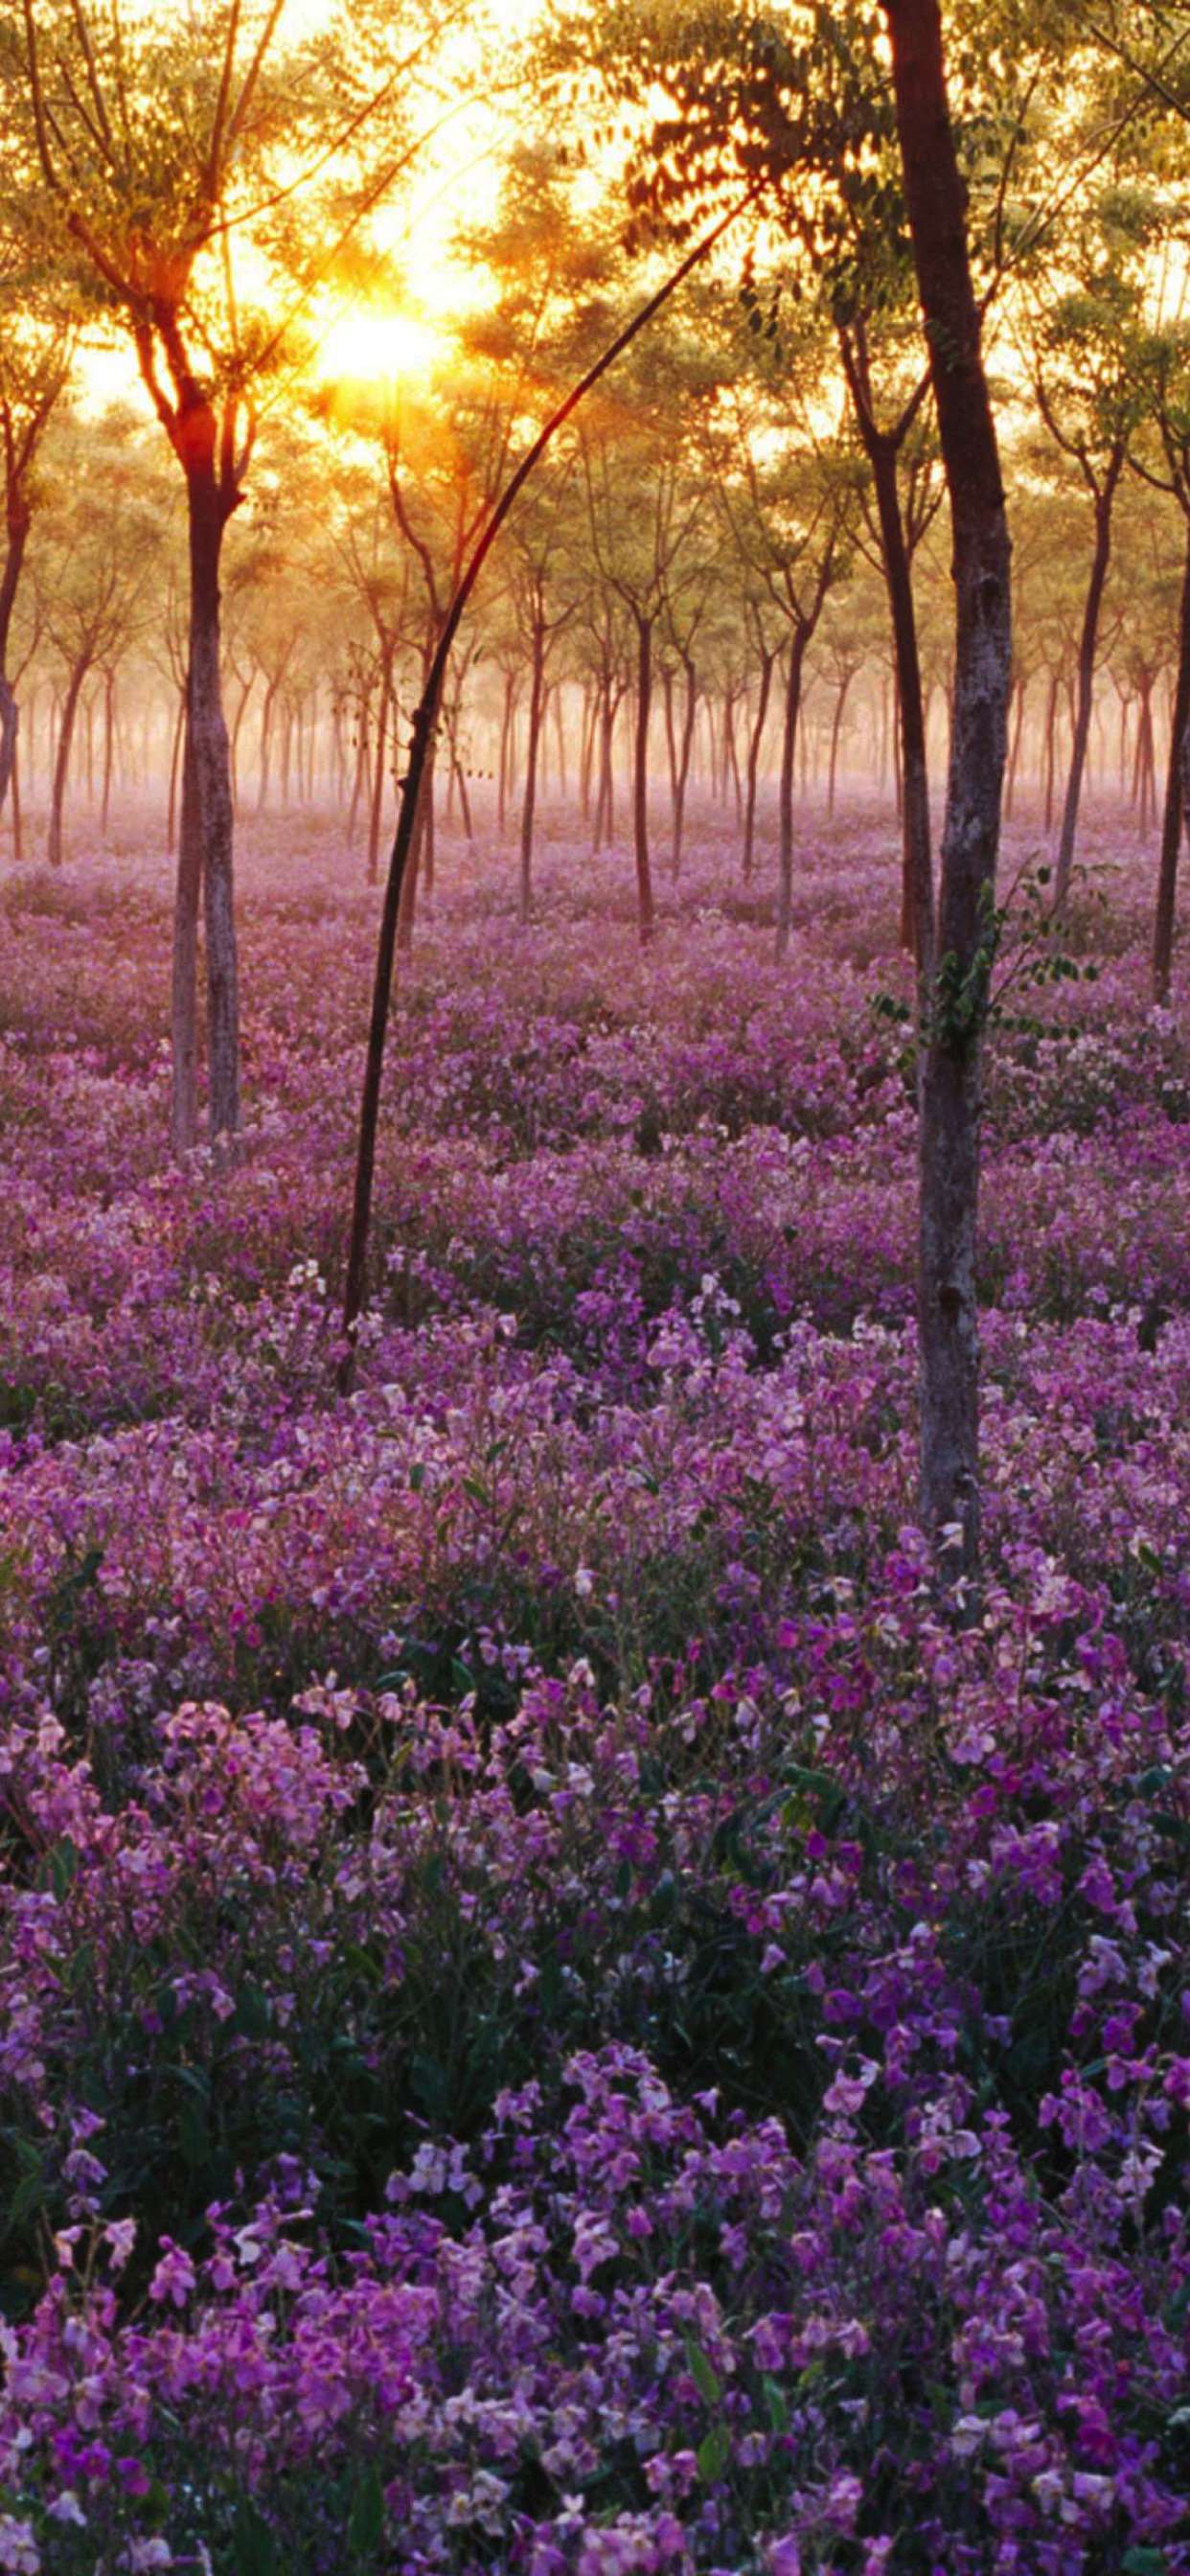 Purple flower tree views | wallpaper.sc iPhone XS Max